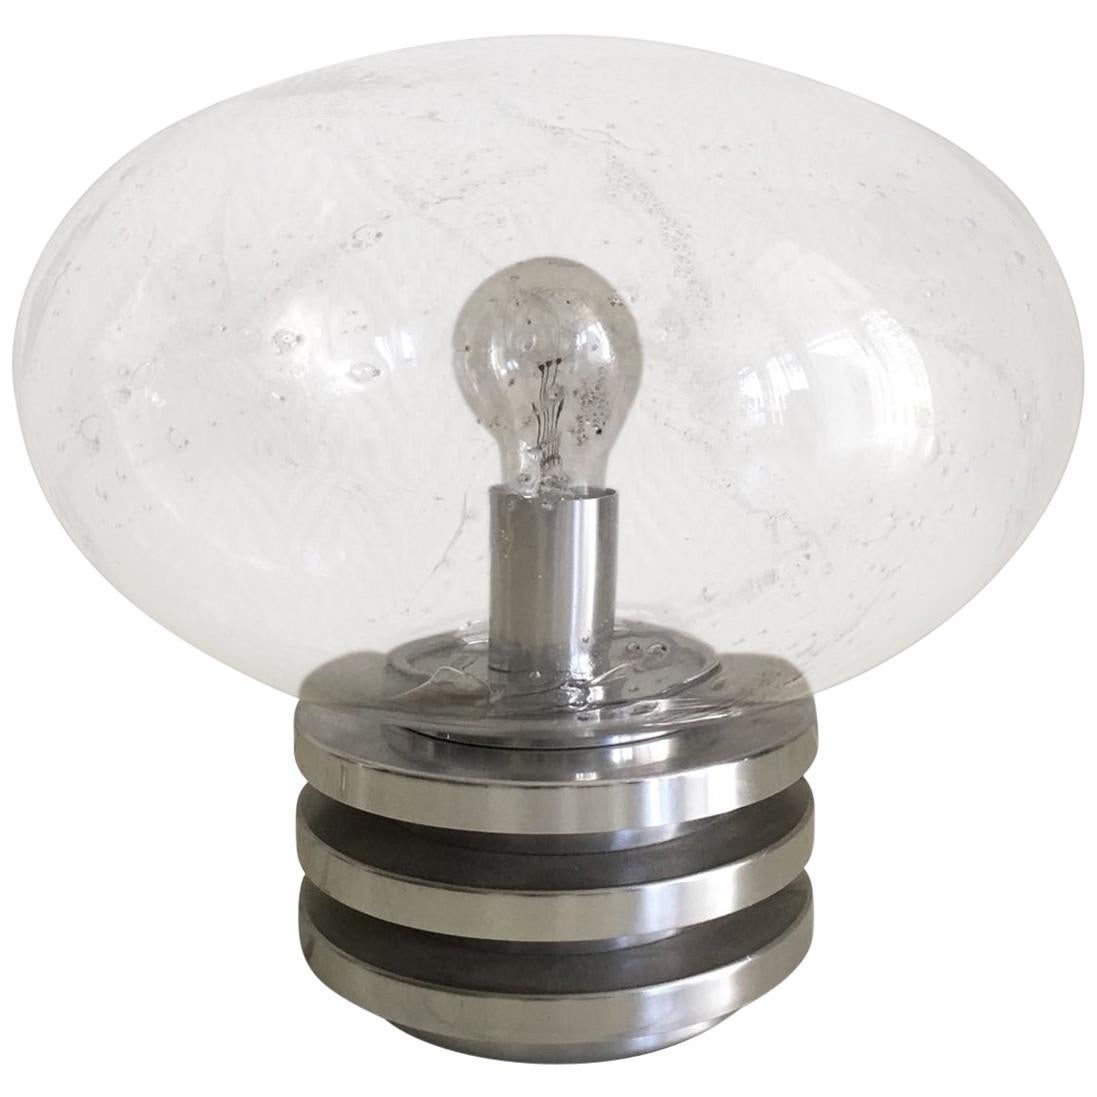 Doria Leuchten Germany Space Age Table Lamp with Handblown Bubbleglass